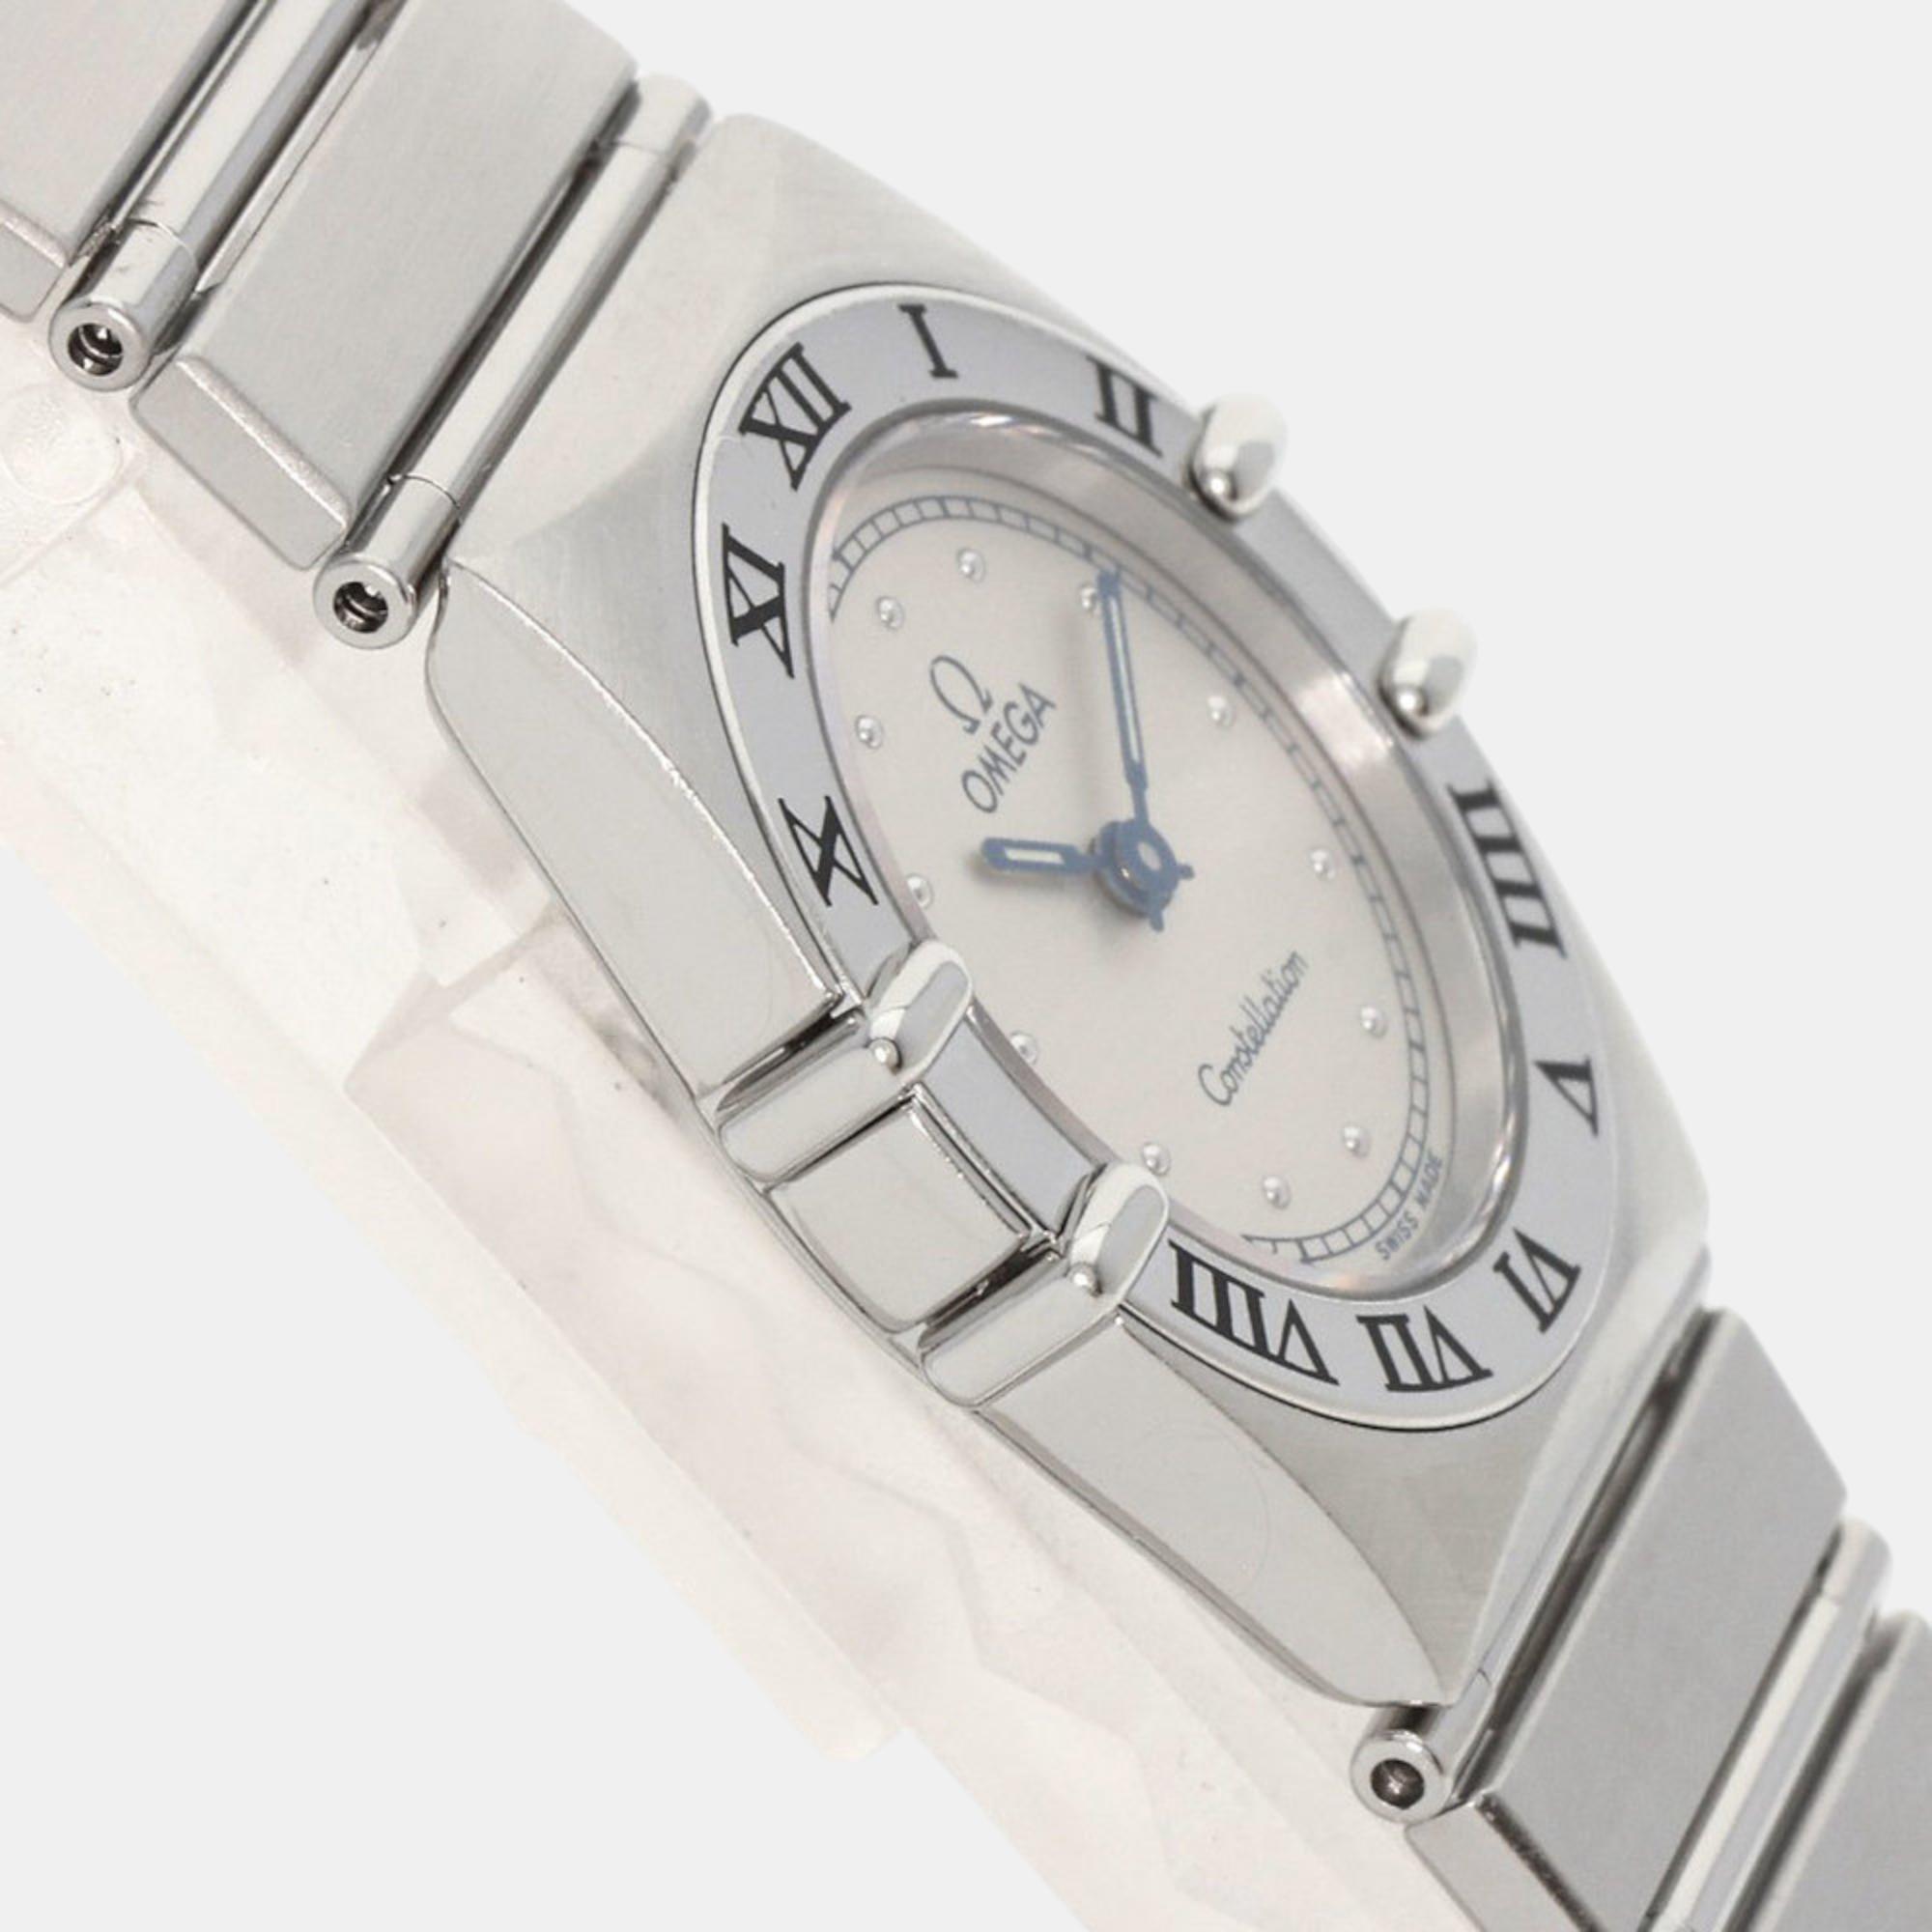 Omega Silver Stainless Steel Constellation Quartz Women's Wristwatch 23 Mm